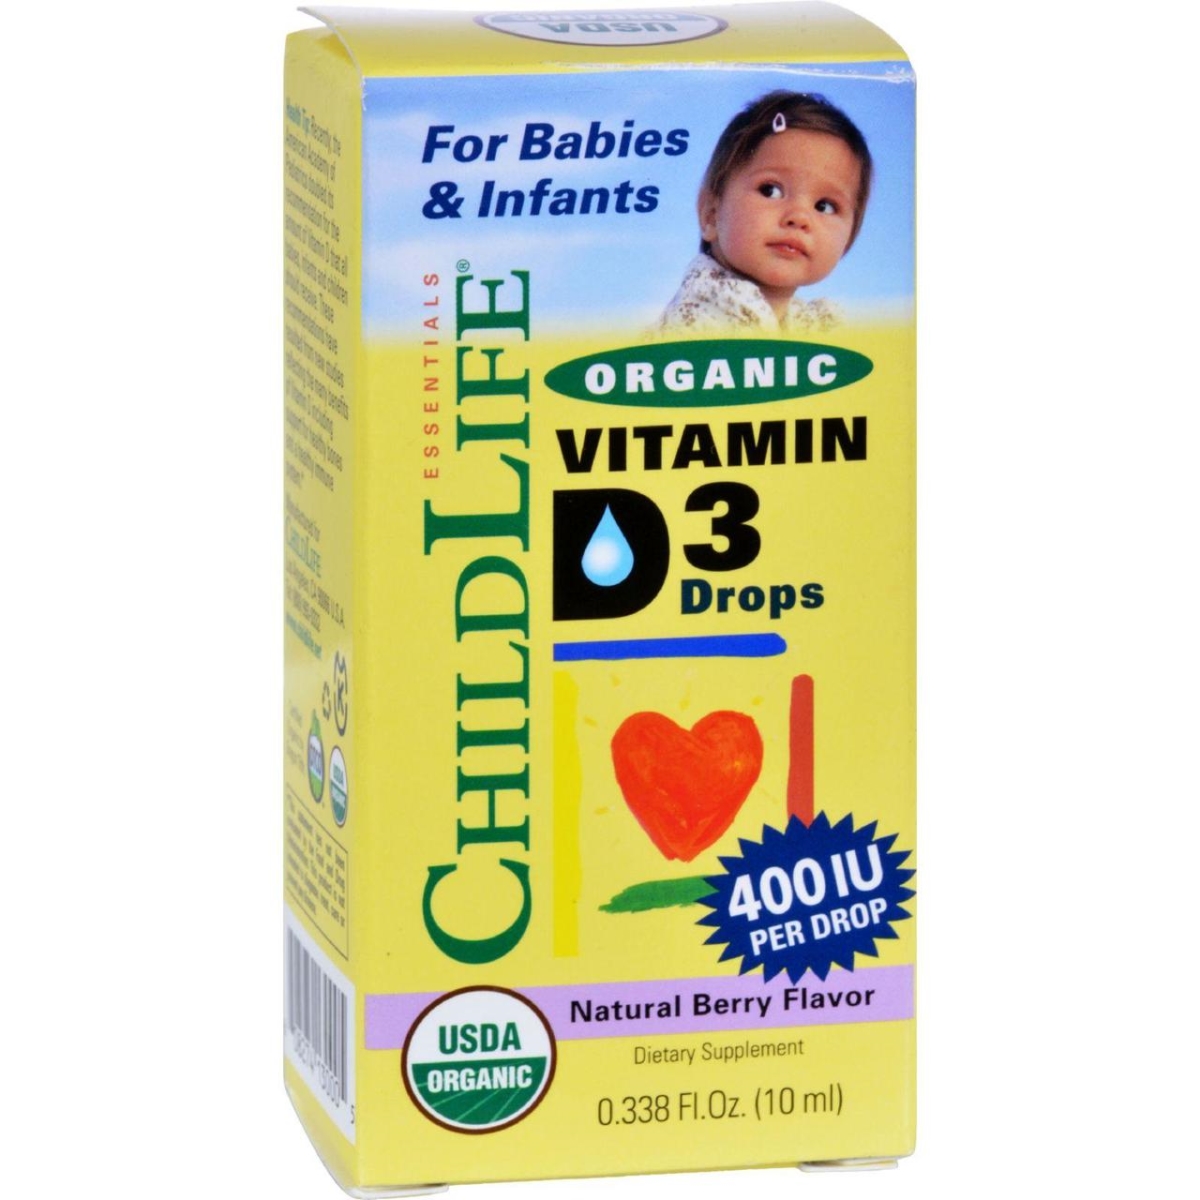 Child Life Hg1278431 0.33 Oz Organic Vitamin D3 Drops For Babies & Infants - Natural Berry